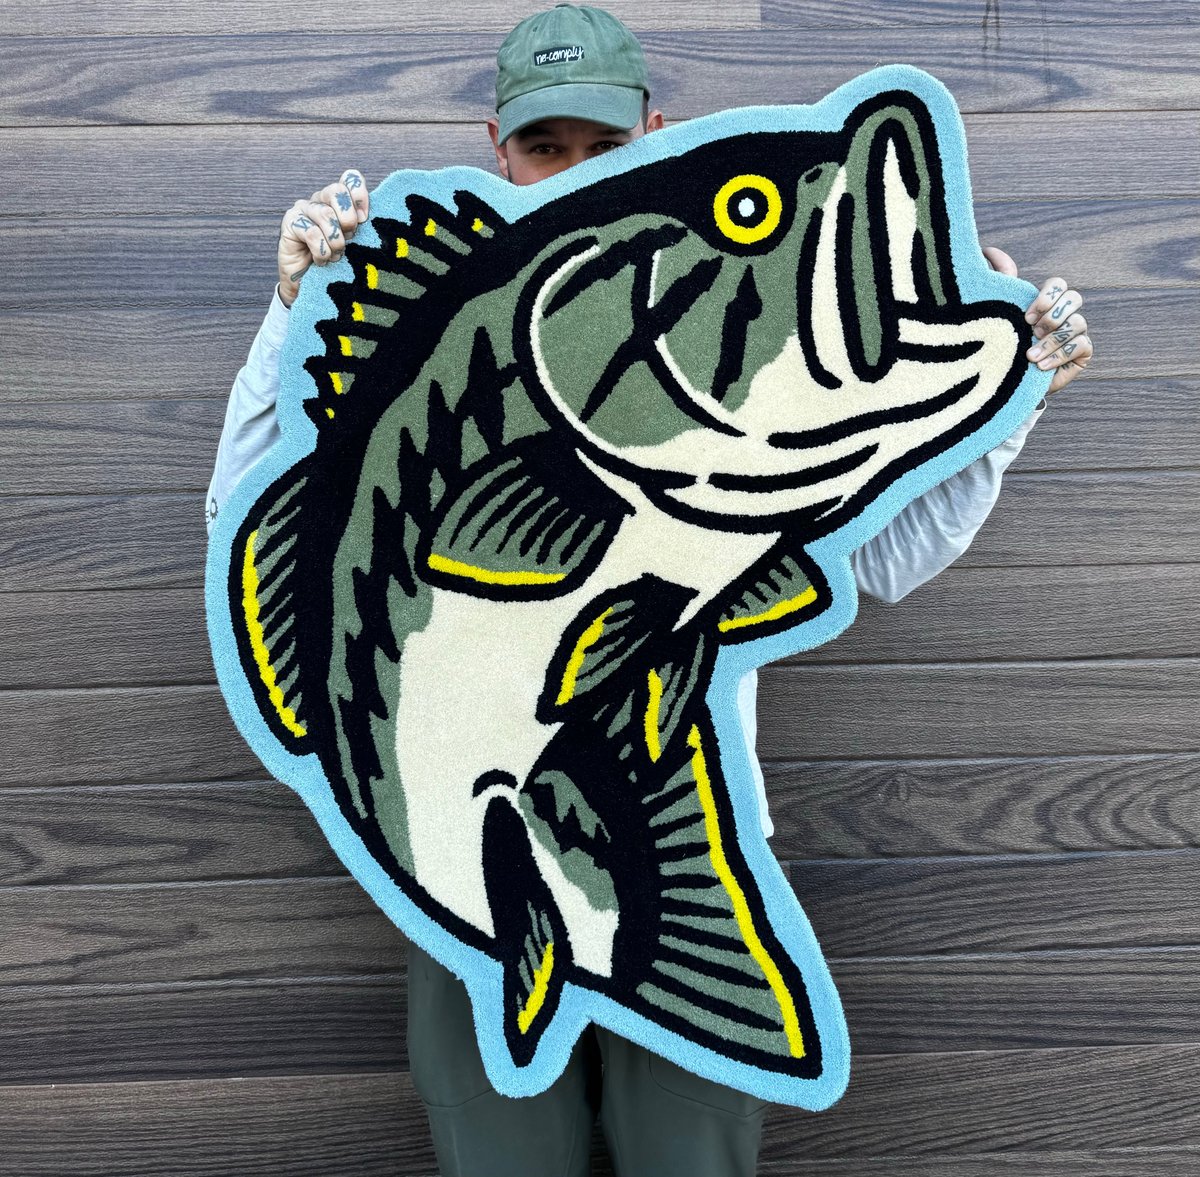 Catch Fish Not Feelings Carpet Decal – Big Bass Dreams